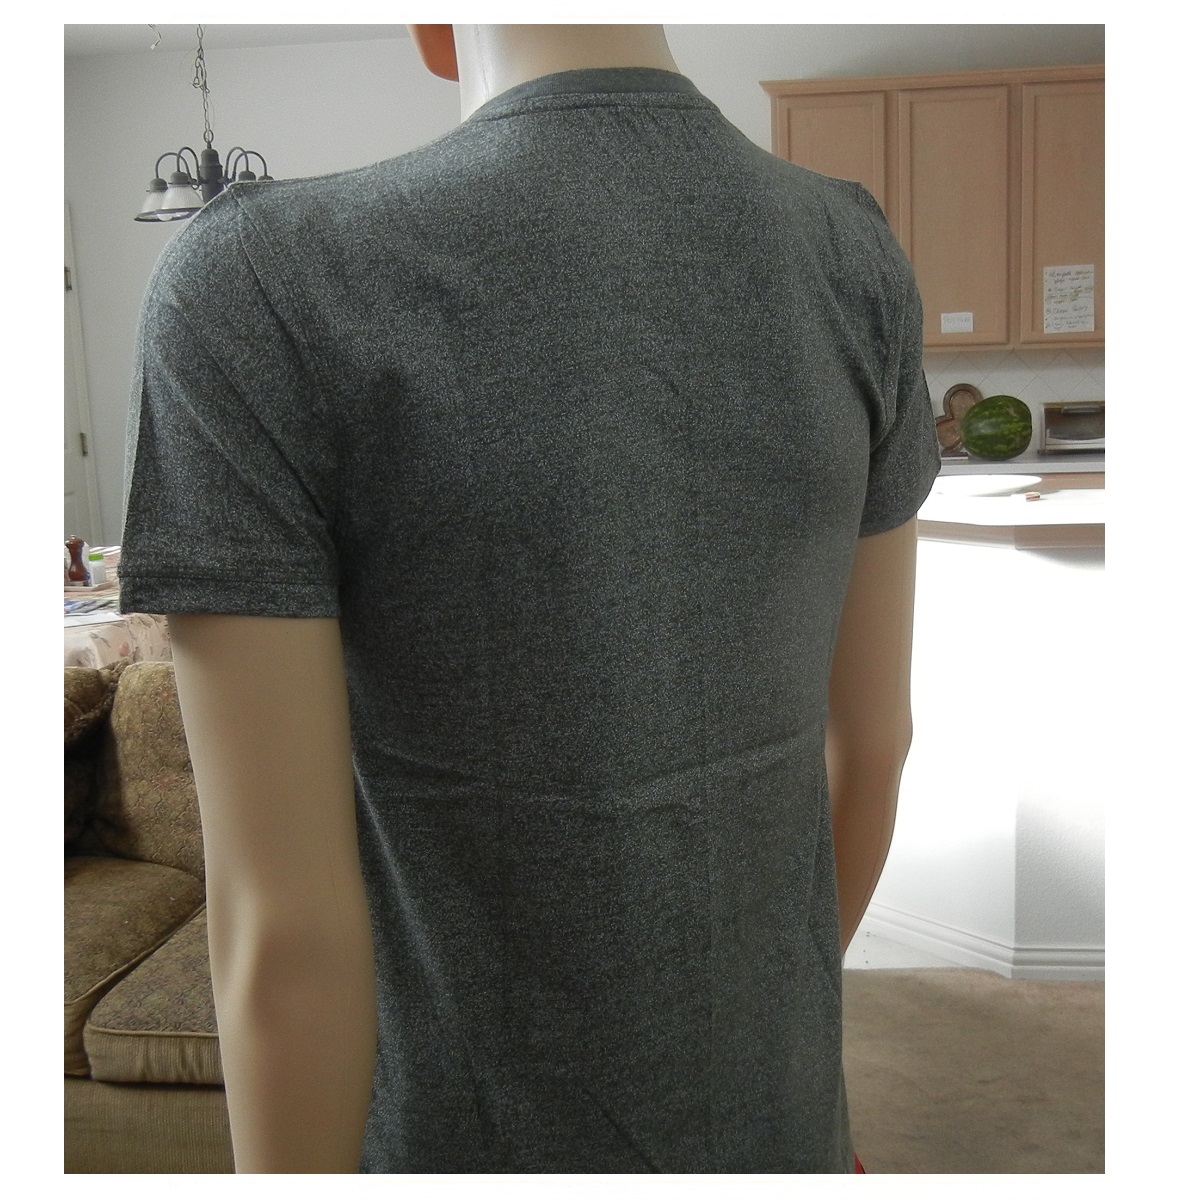 Men's T-Shirt, Short Sleeve V-Neck Cotton T-Shirt Basic Plain T-Shirt for men, Heather gray